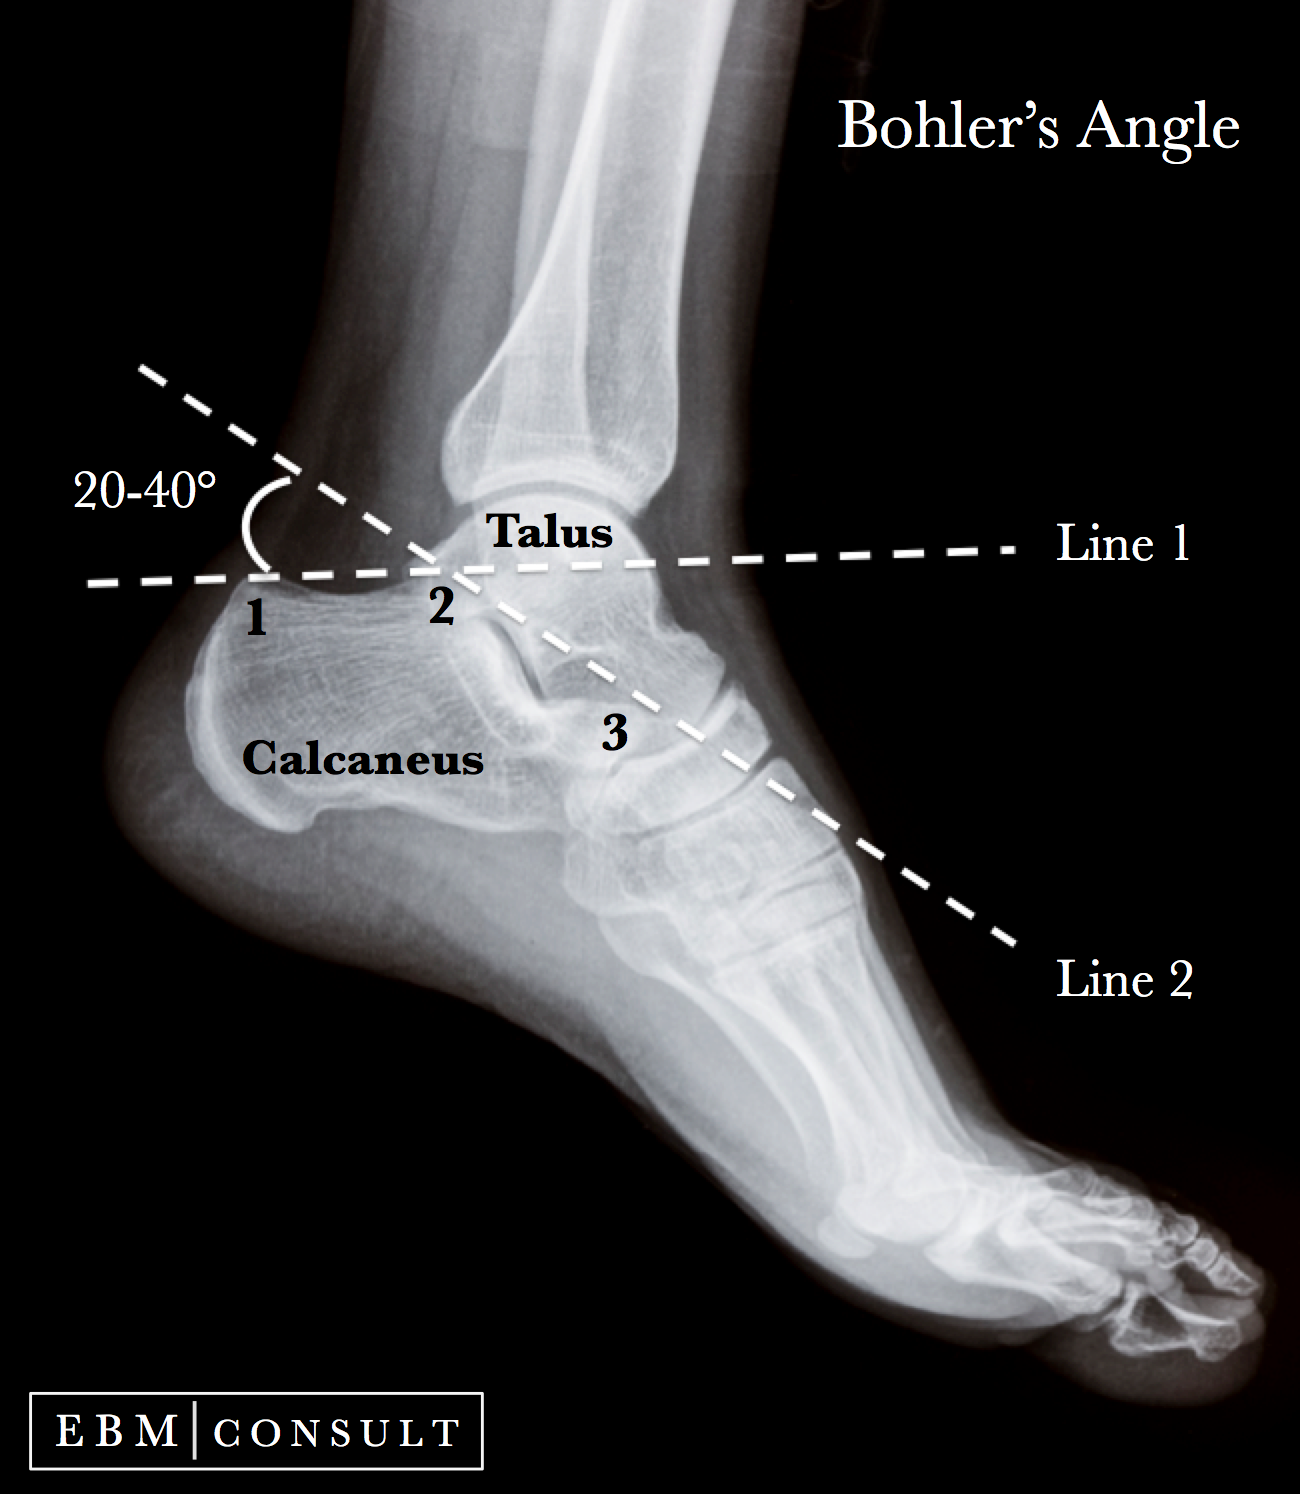 Bohlers Angle Ankle Xray Image